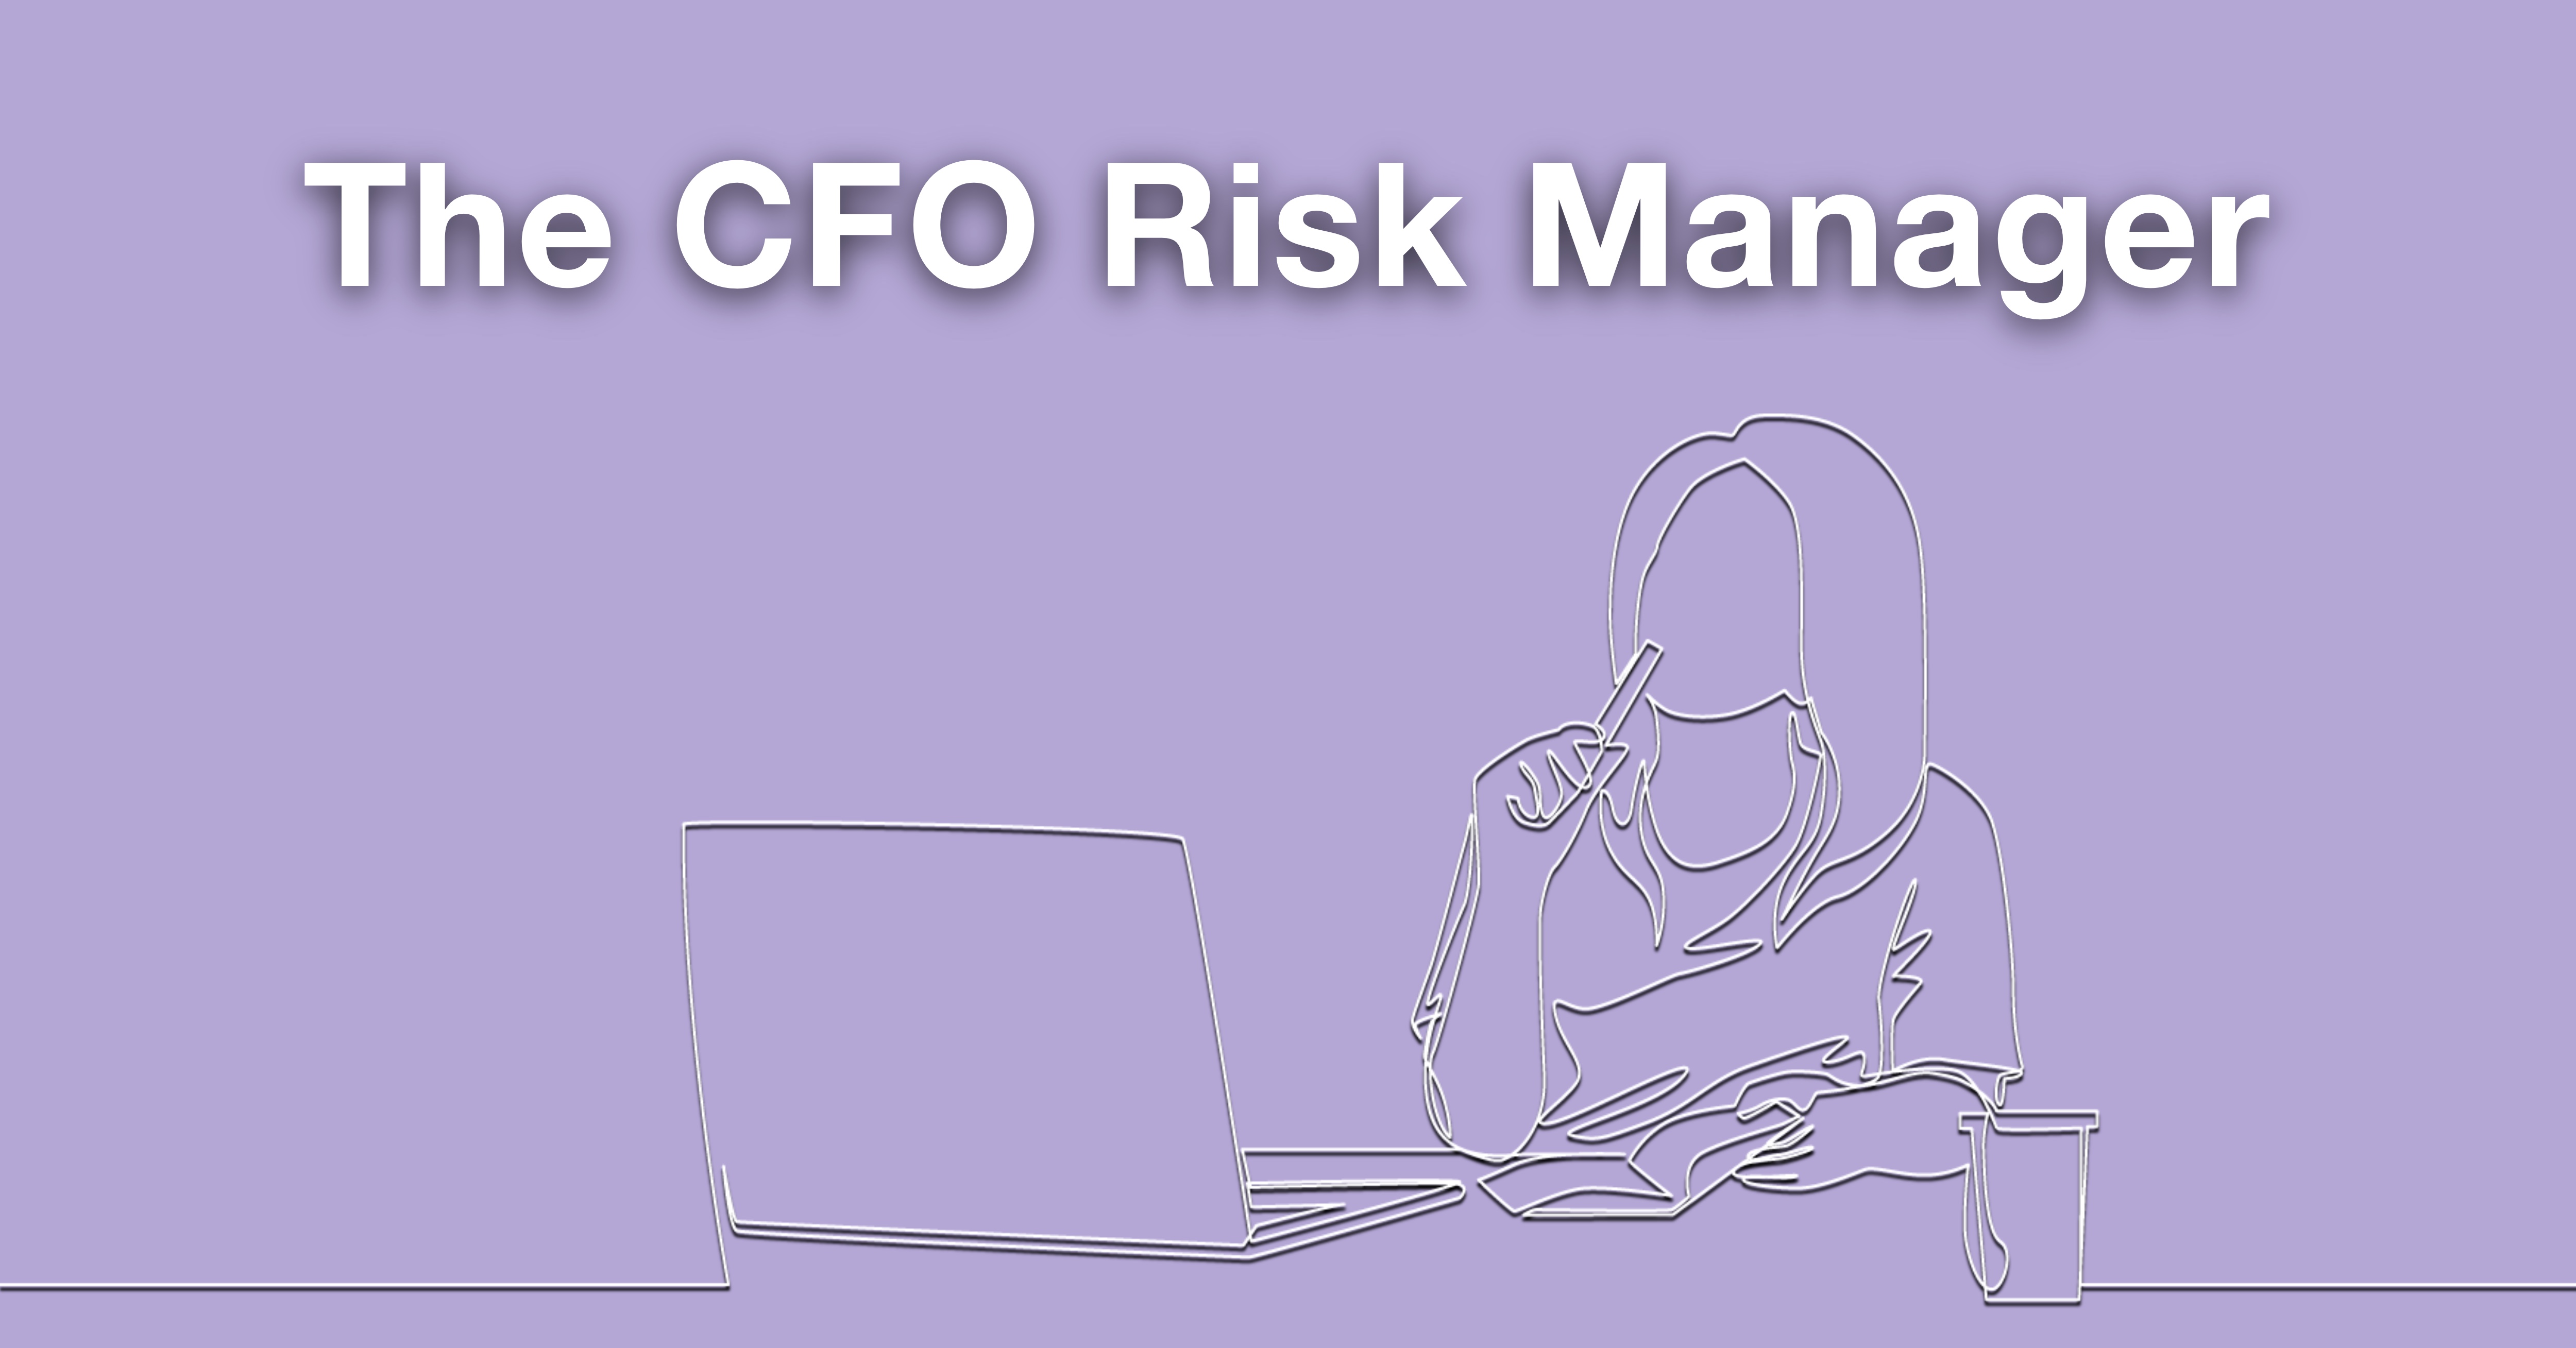 The CFO Risk Manager